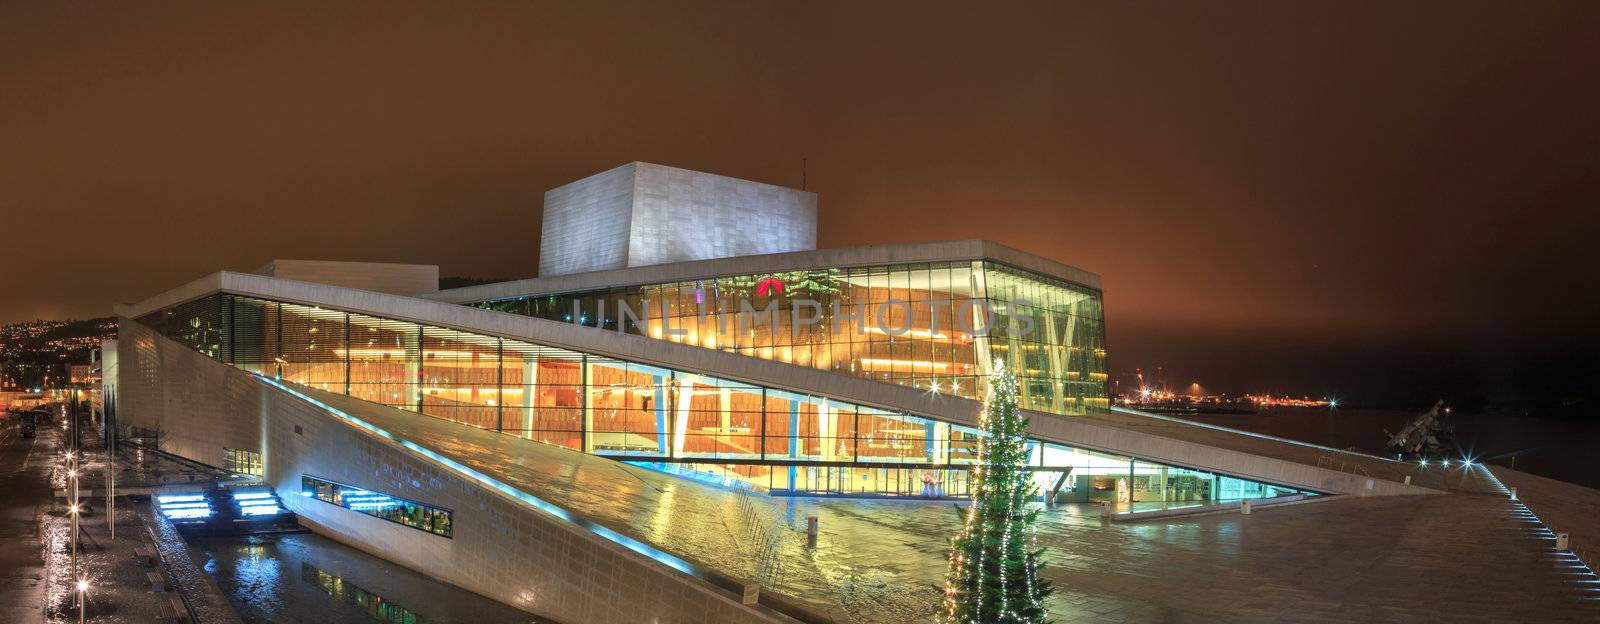 Panorama Oslo Opera House shine at night Norway